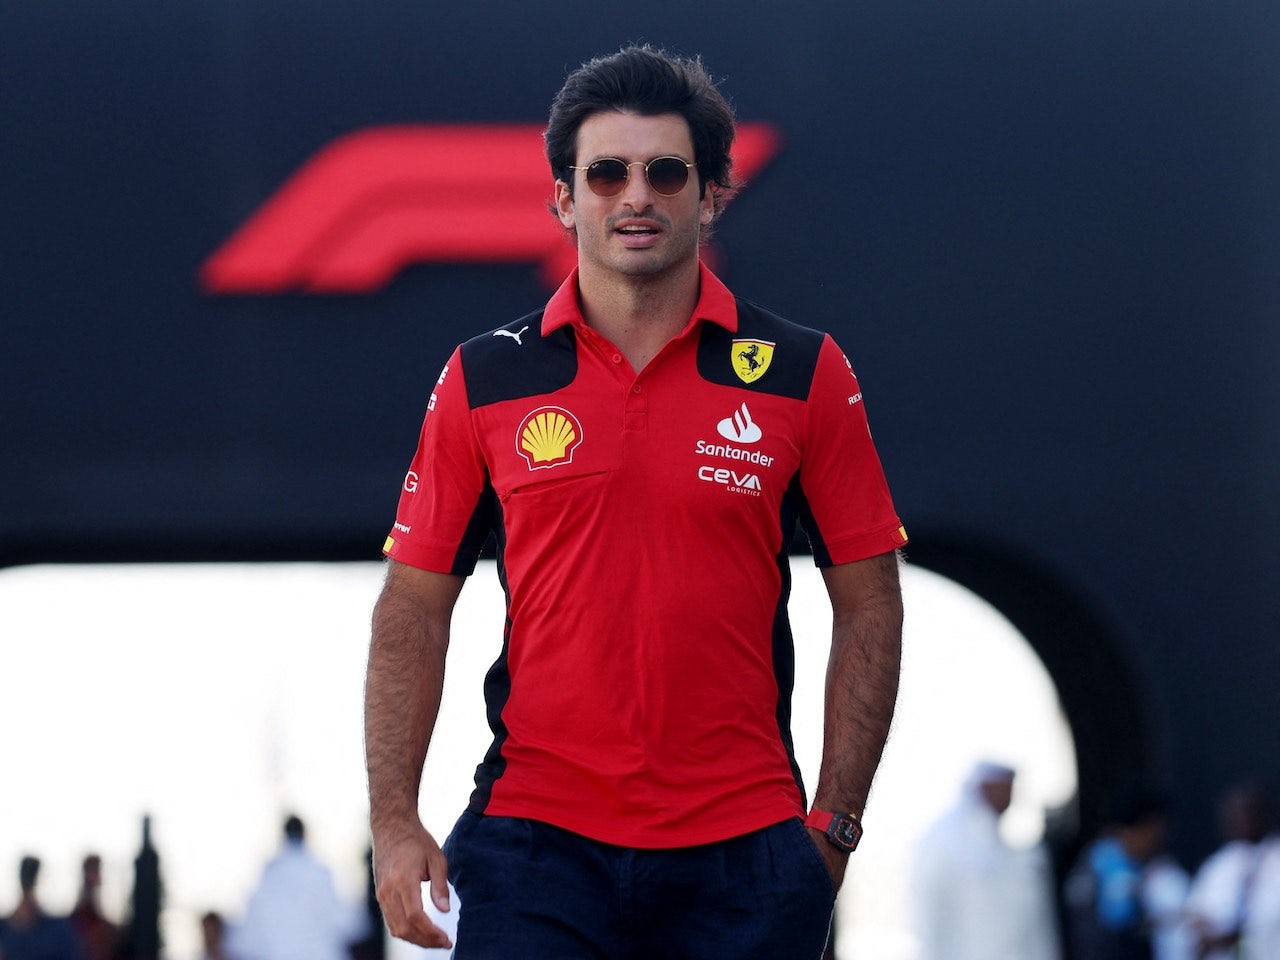 Drivers 'the least' of Ferrari's problems - Montezemolo